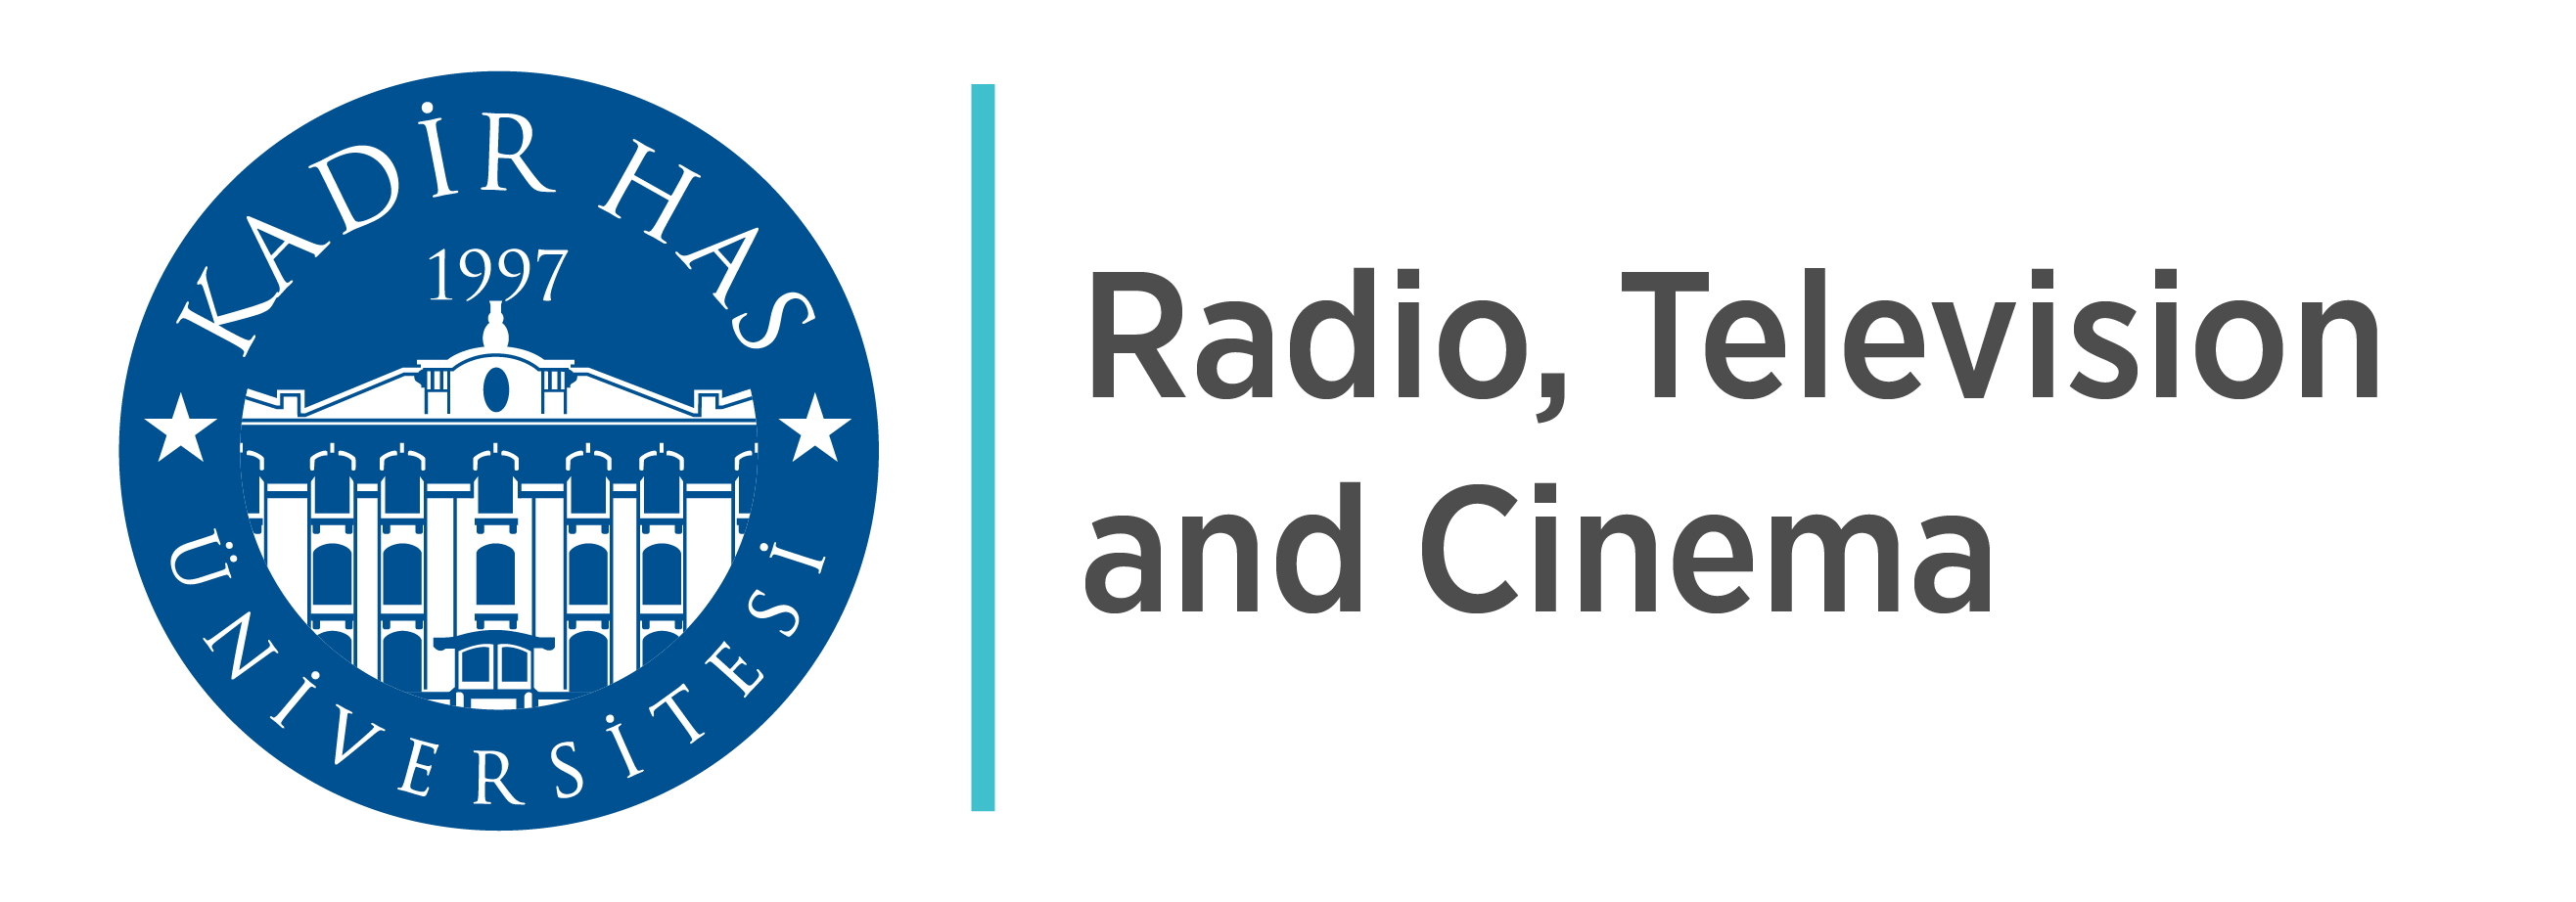 Radio, Television and Cinema